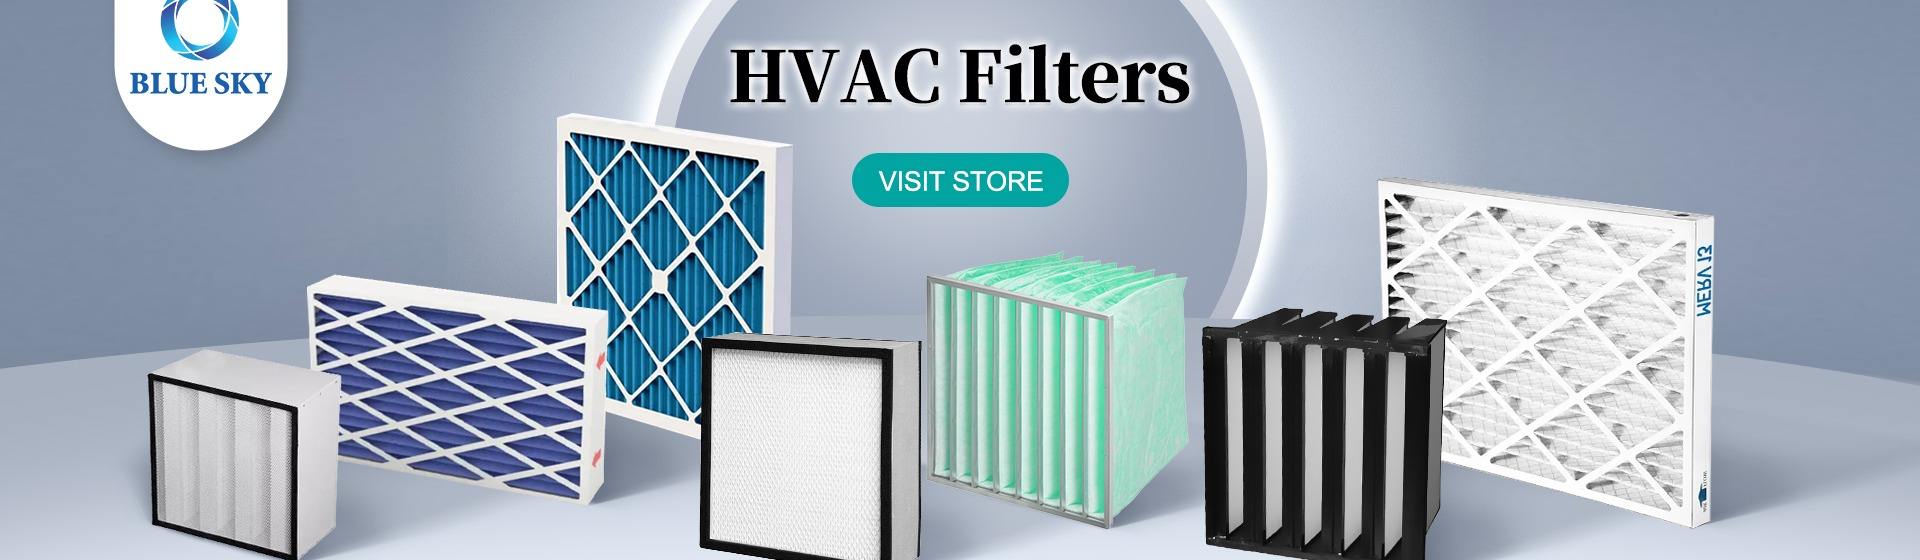 HVAC Filters